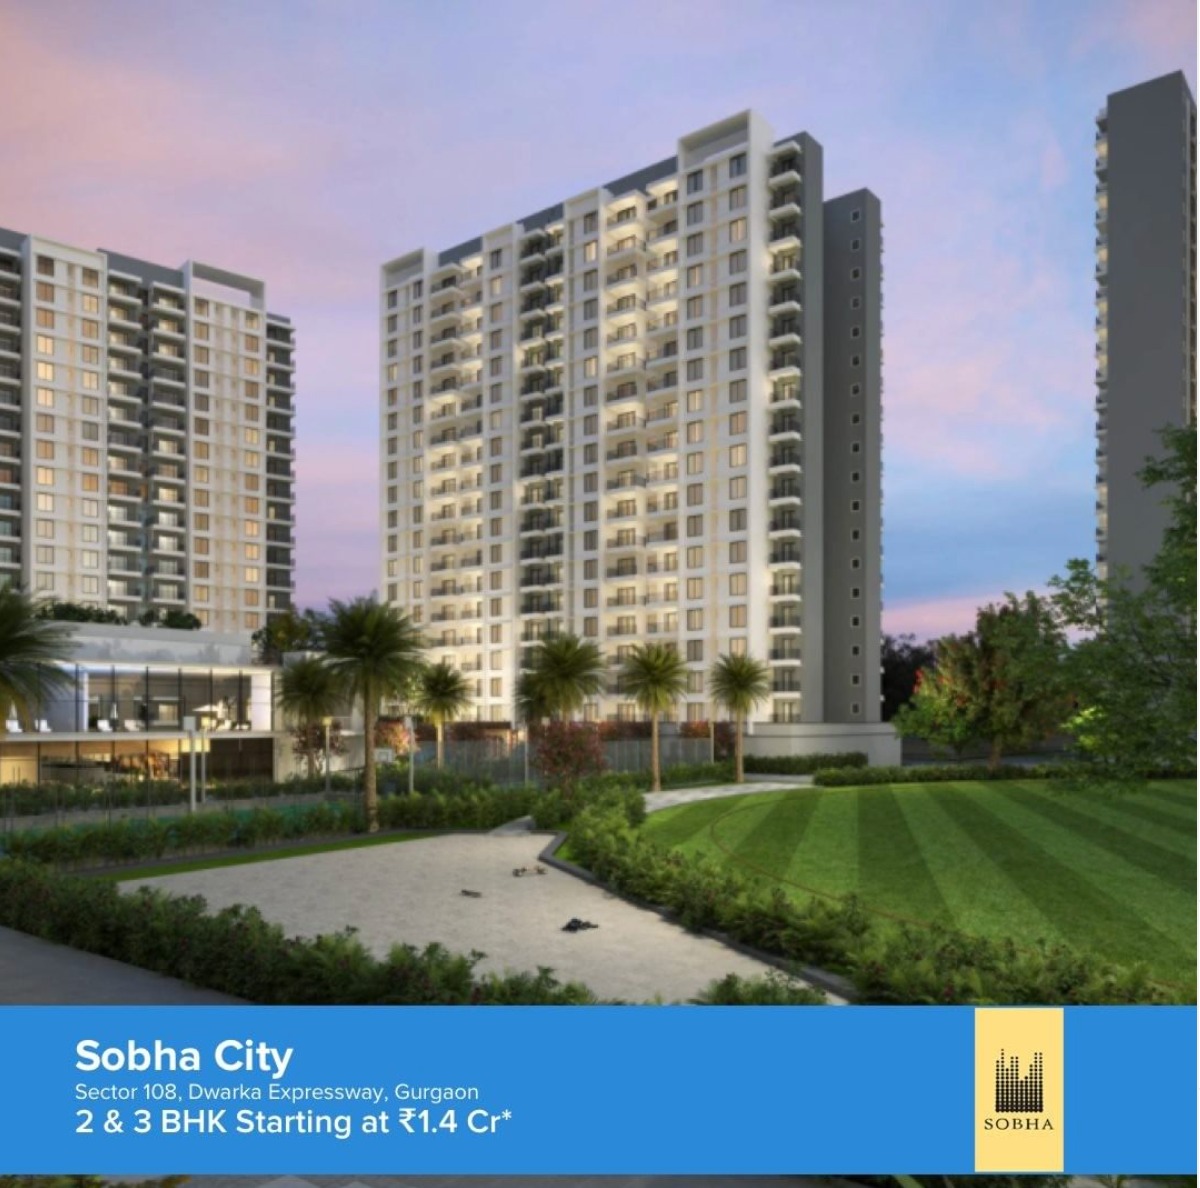 Sobha City Presenting 2 & 3 BHK Premium Floors in Sector 108 Dwarka Expressway, Gurgaon Update